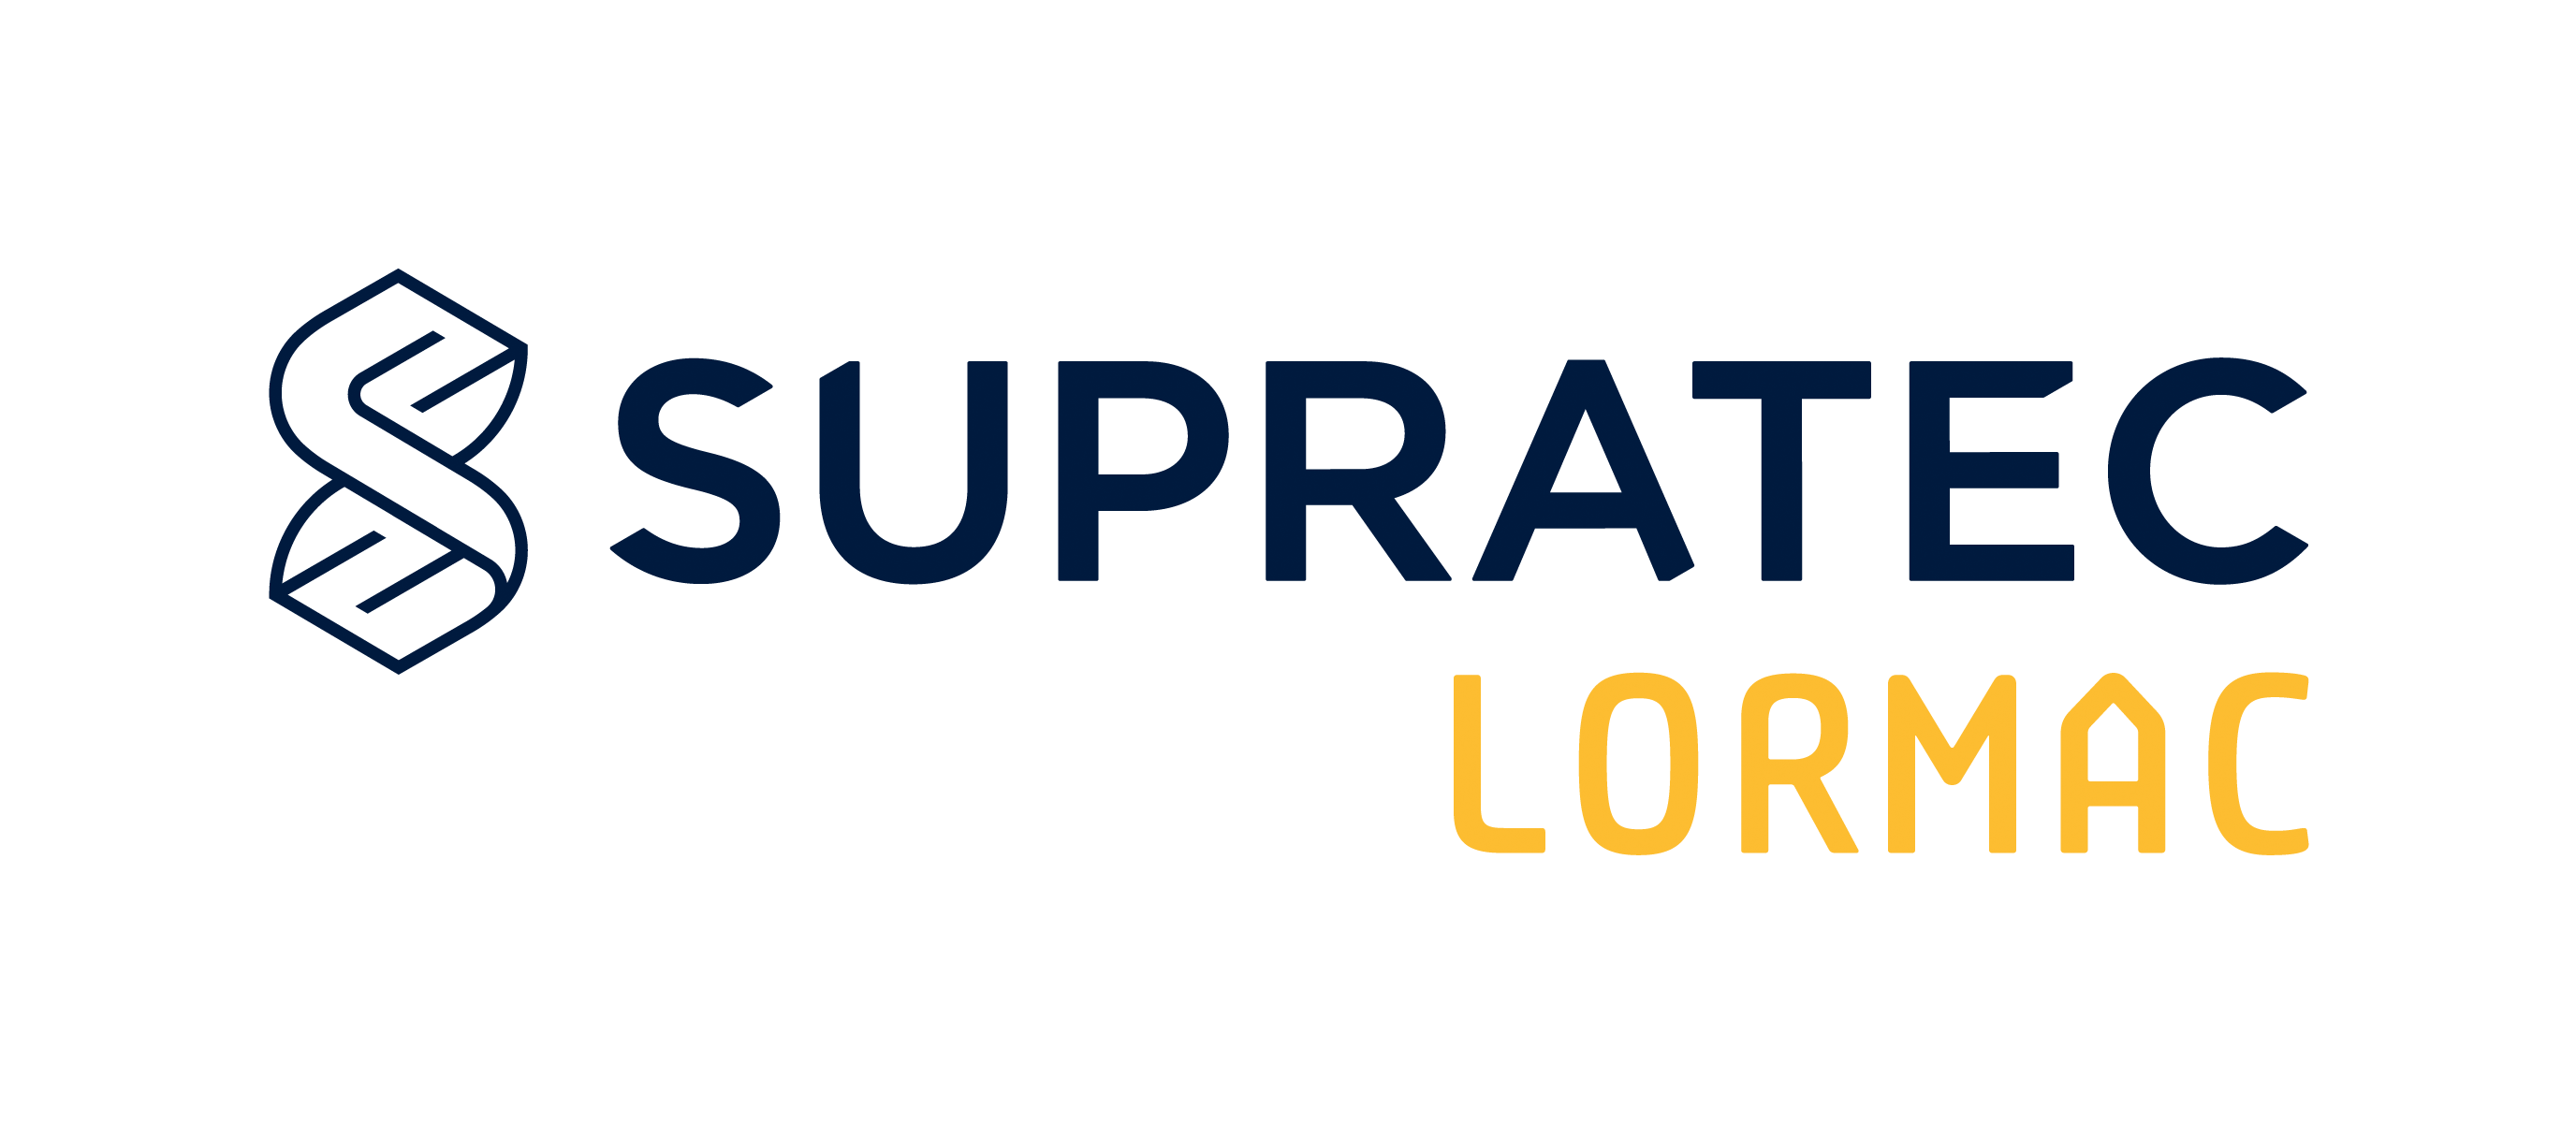 Logo the brand SUPRATEC Lormac